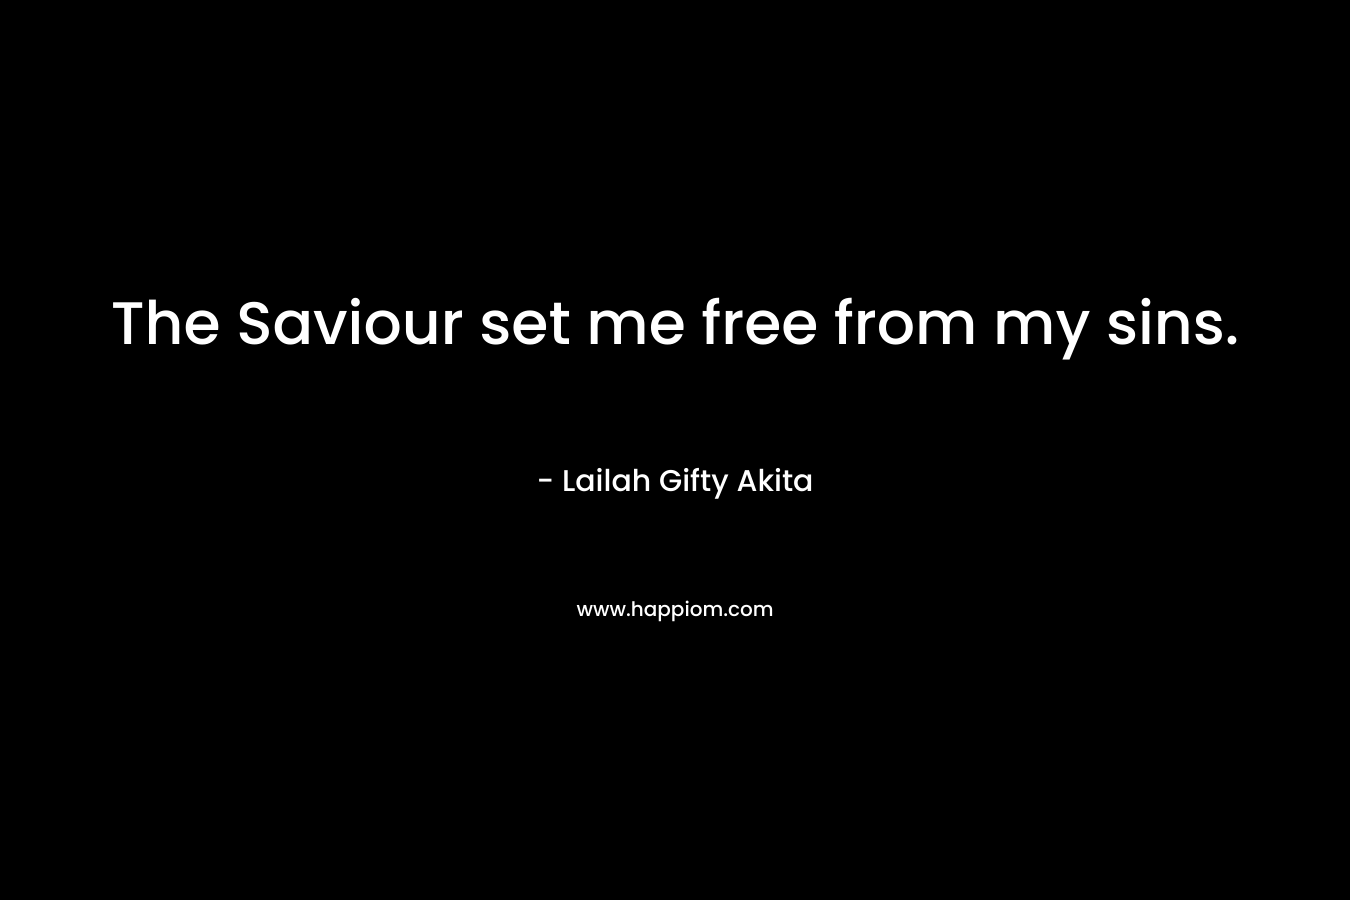 The Saviour set me free from my sins.